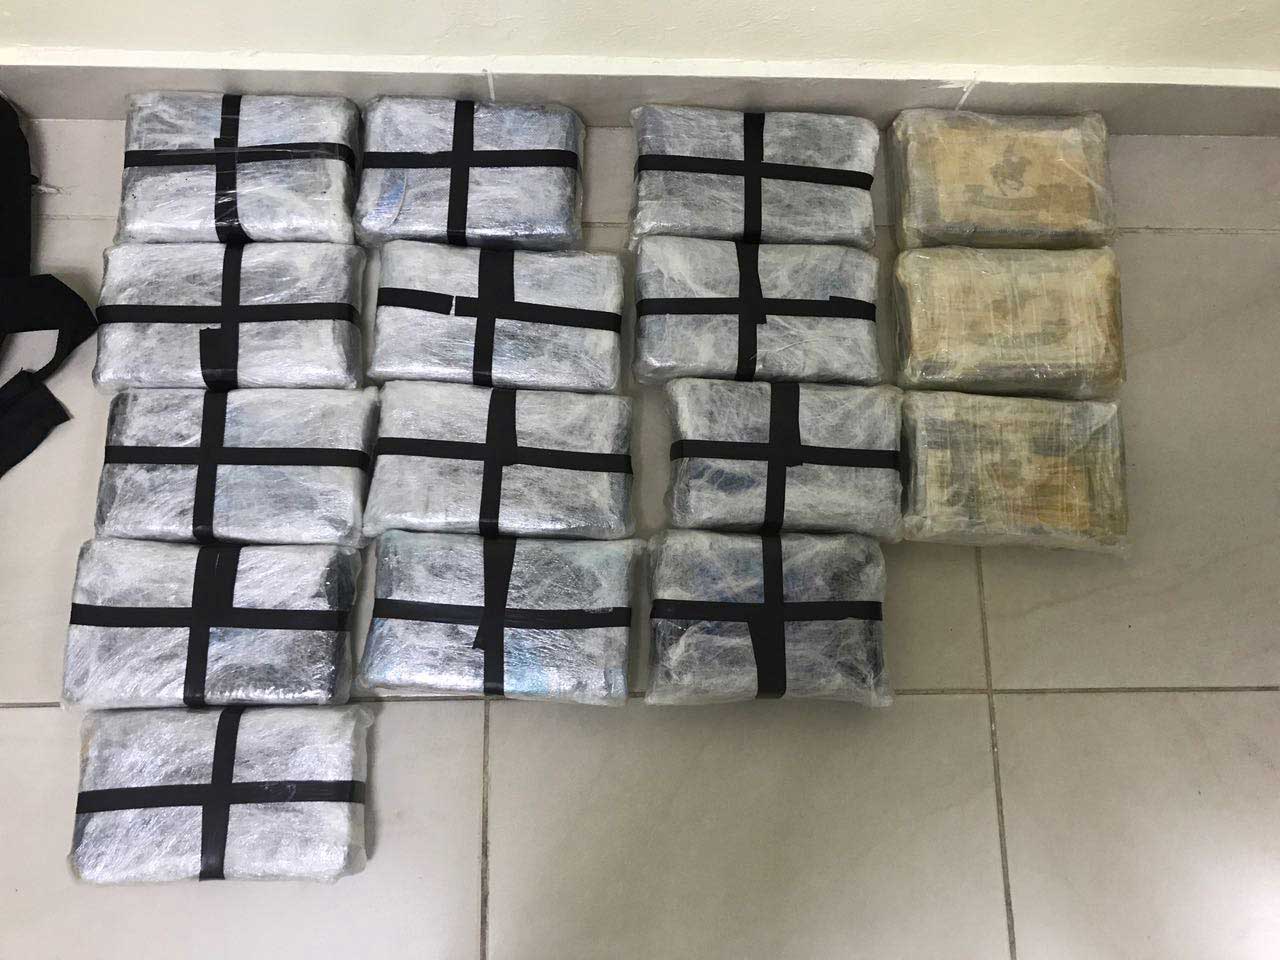 DNCD decomisa 26 kilos de cocaína en Punta Cana y la capital